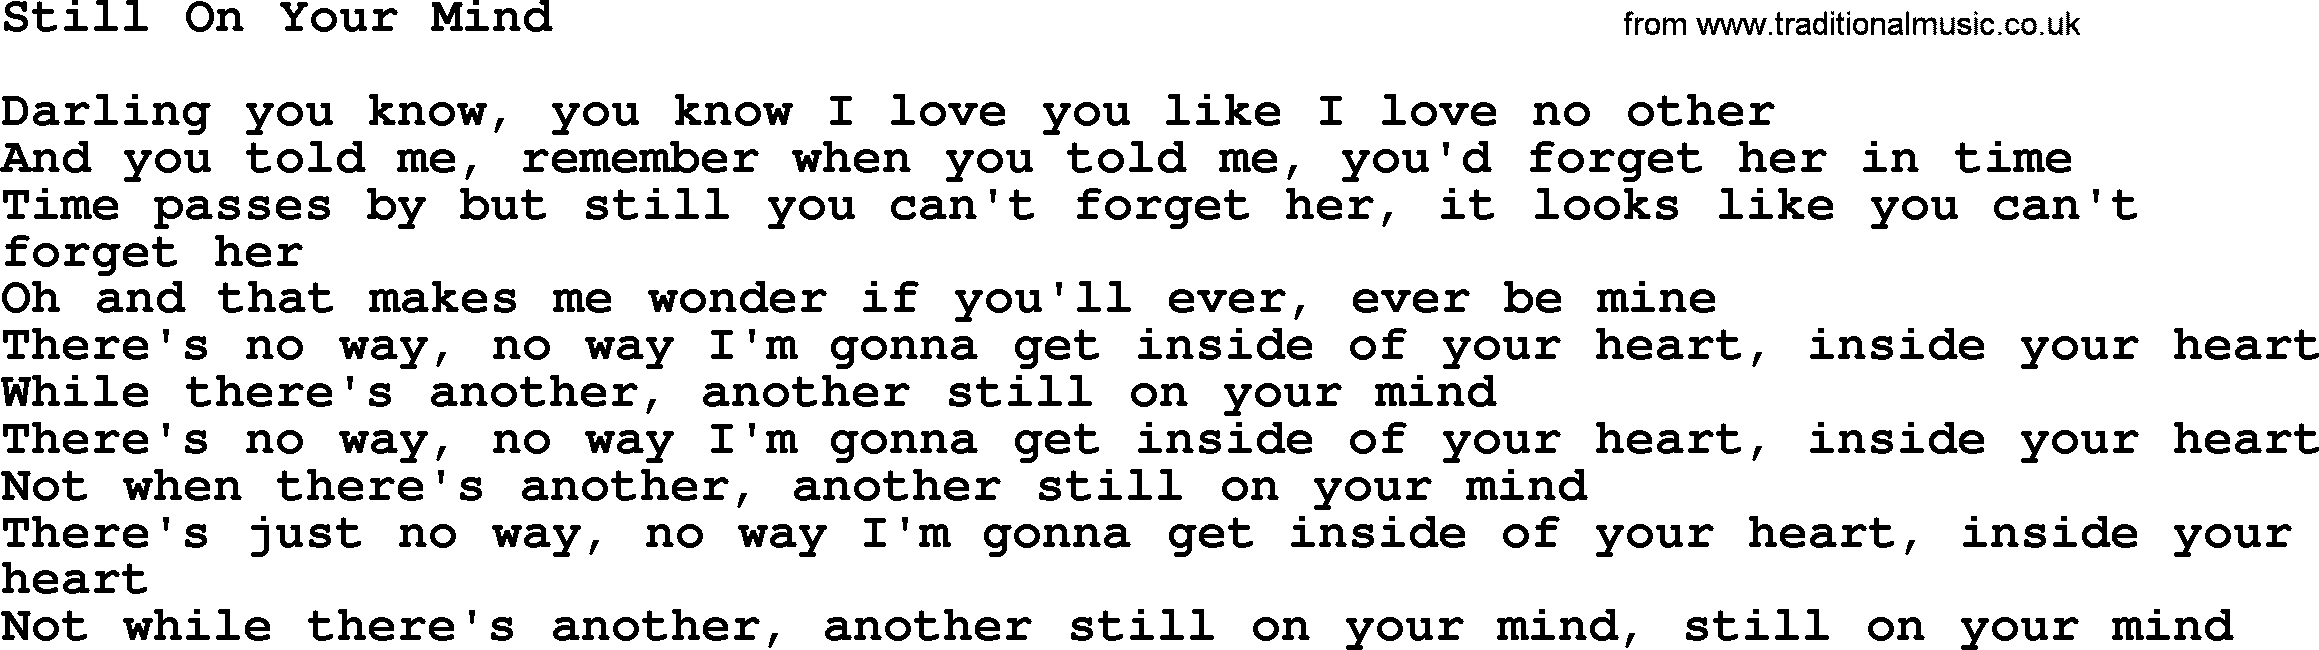 Dolly Parton song Still On Your Mind.txt lyrics